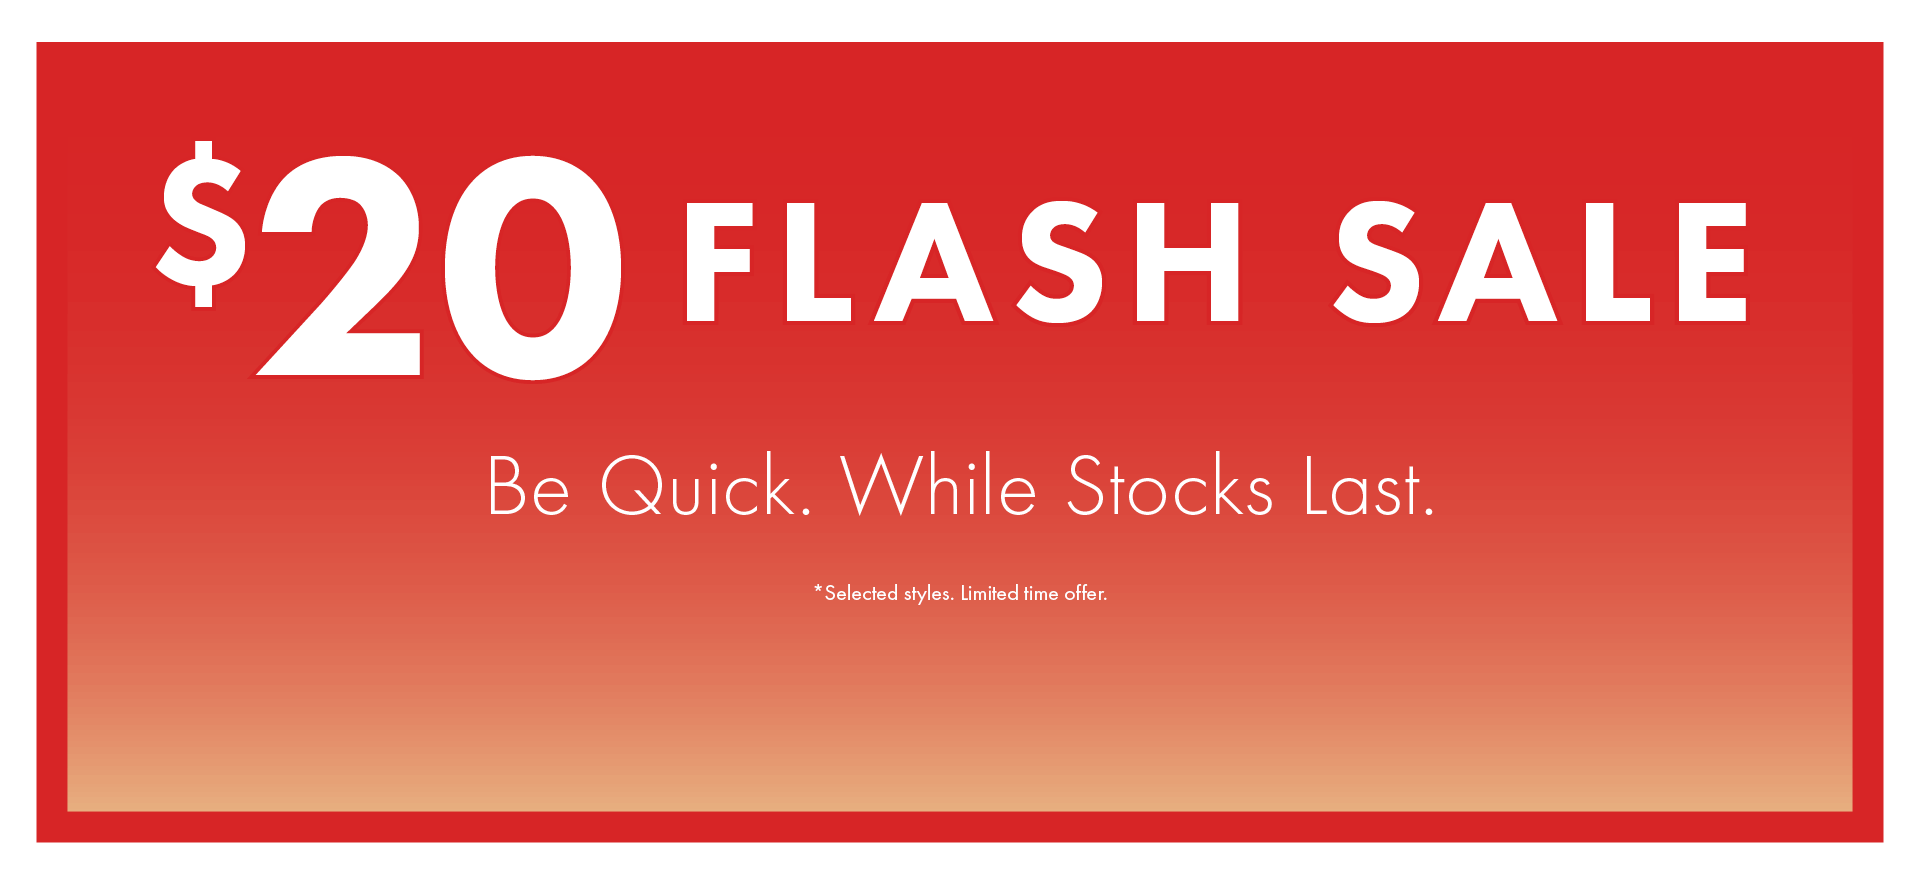 $20 Flash Sale*